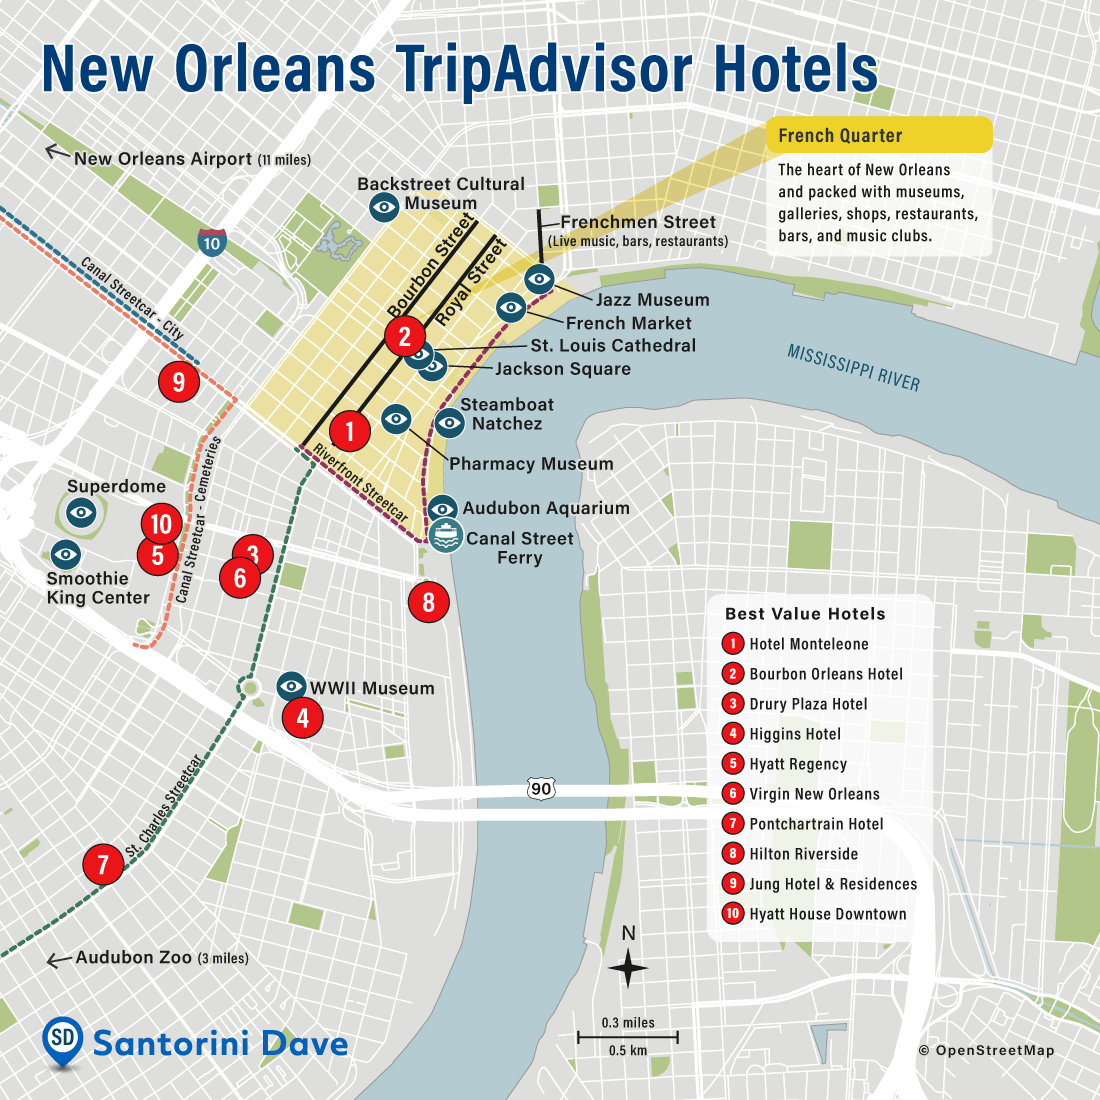 New Orleans TripAdvisor Hotels